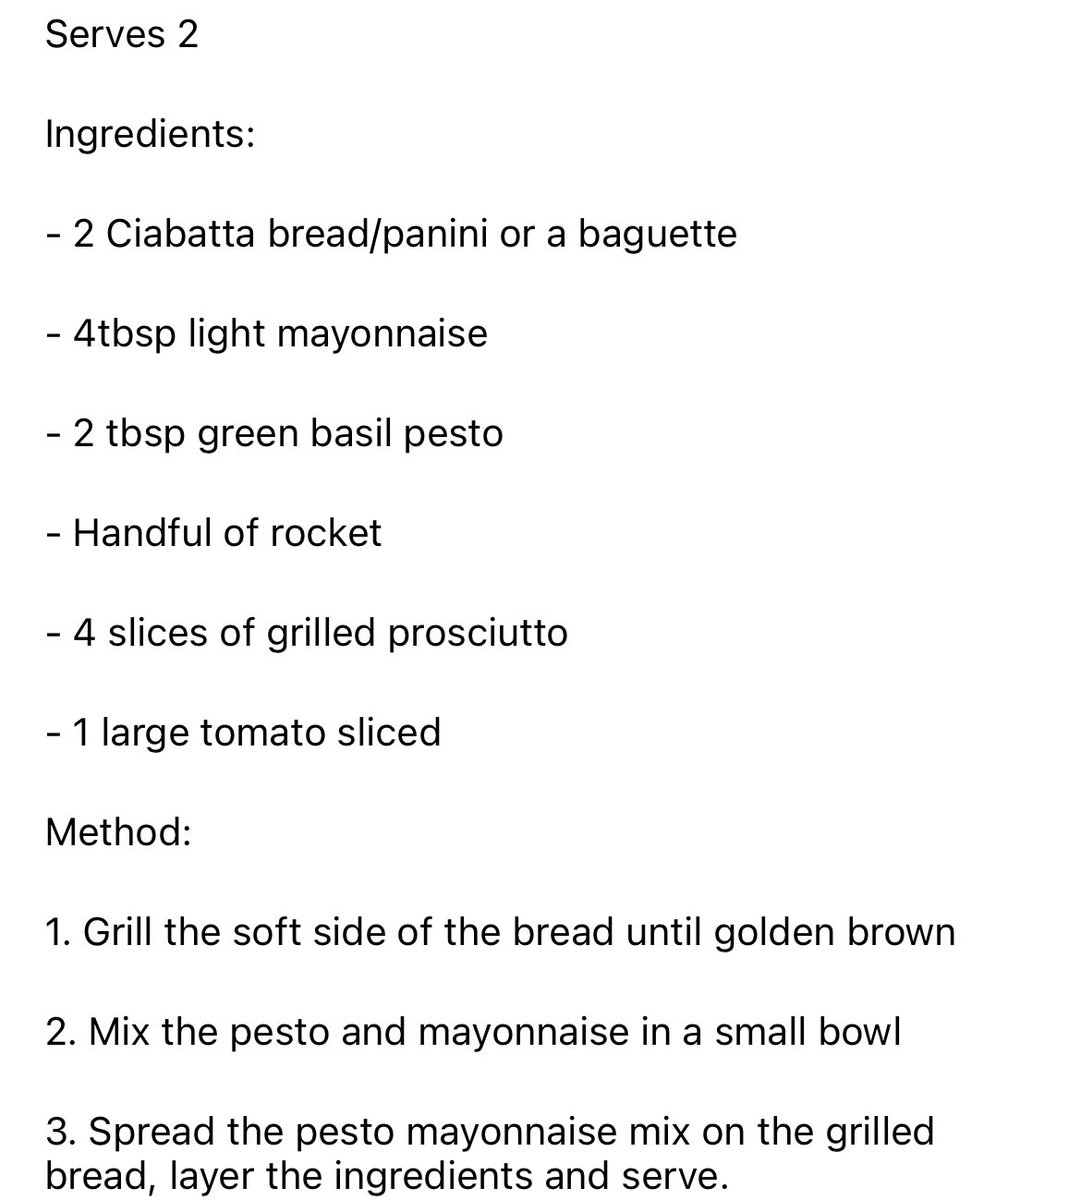 Transport your tastebuds with our Italian BLT Sandwich with Green Basil Pesto - a taste of Mediterranean magic💚

#pestleandmortar #irishpesto #madeinireland #RecipeOfTheDay